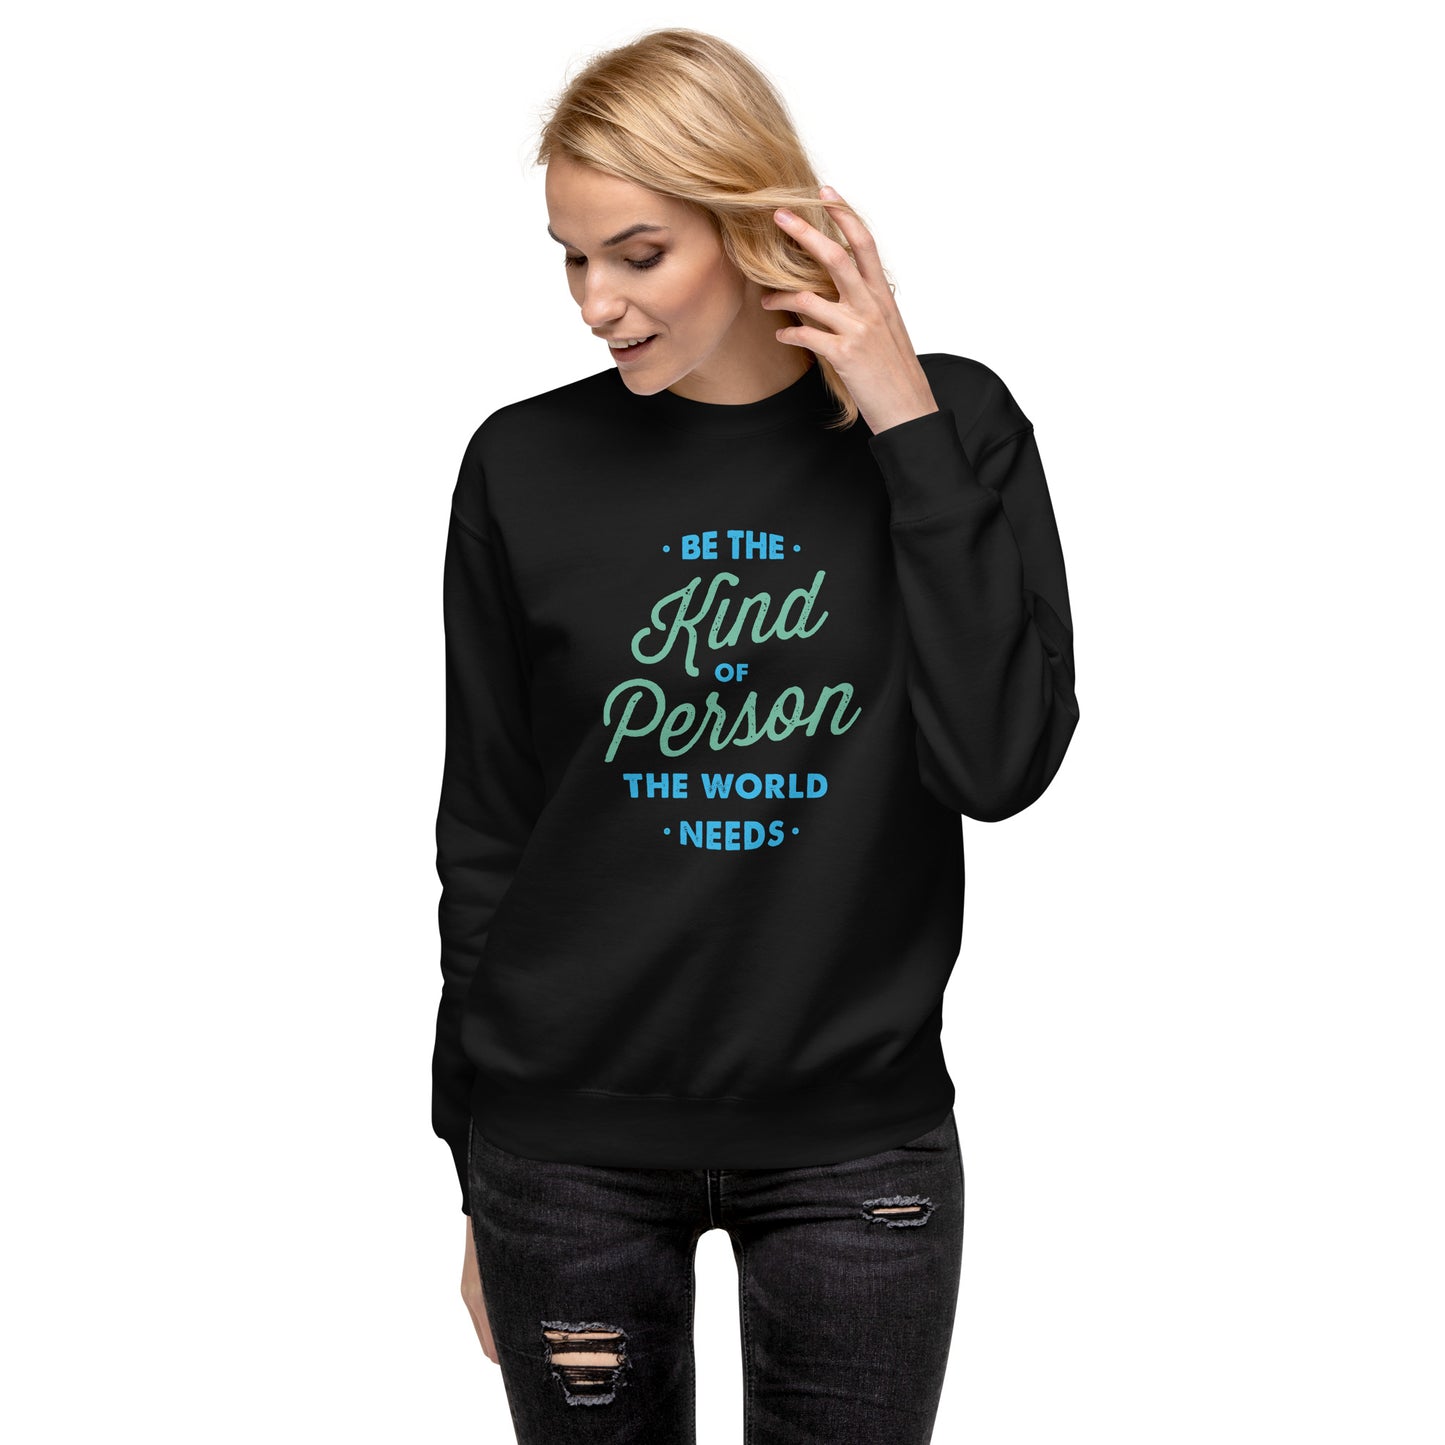 Kind Person - Sweatshirt